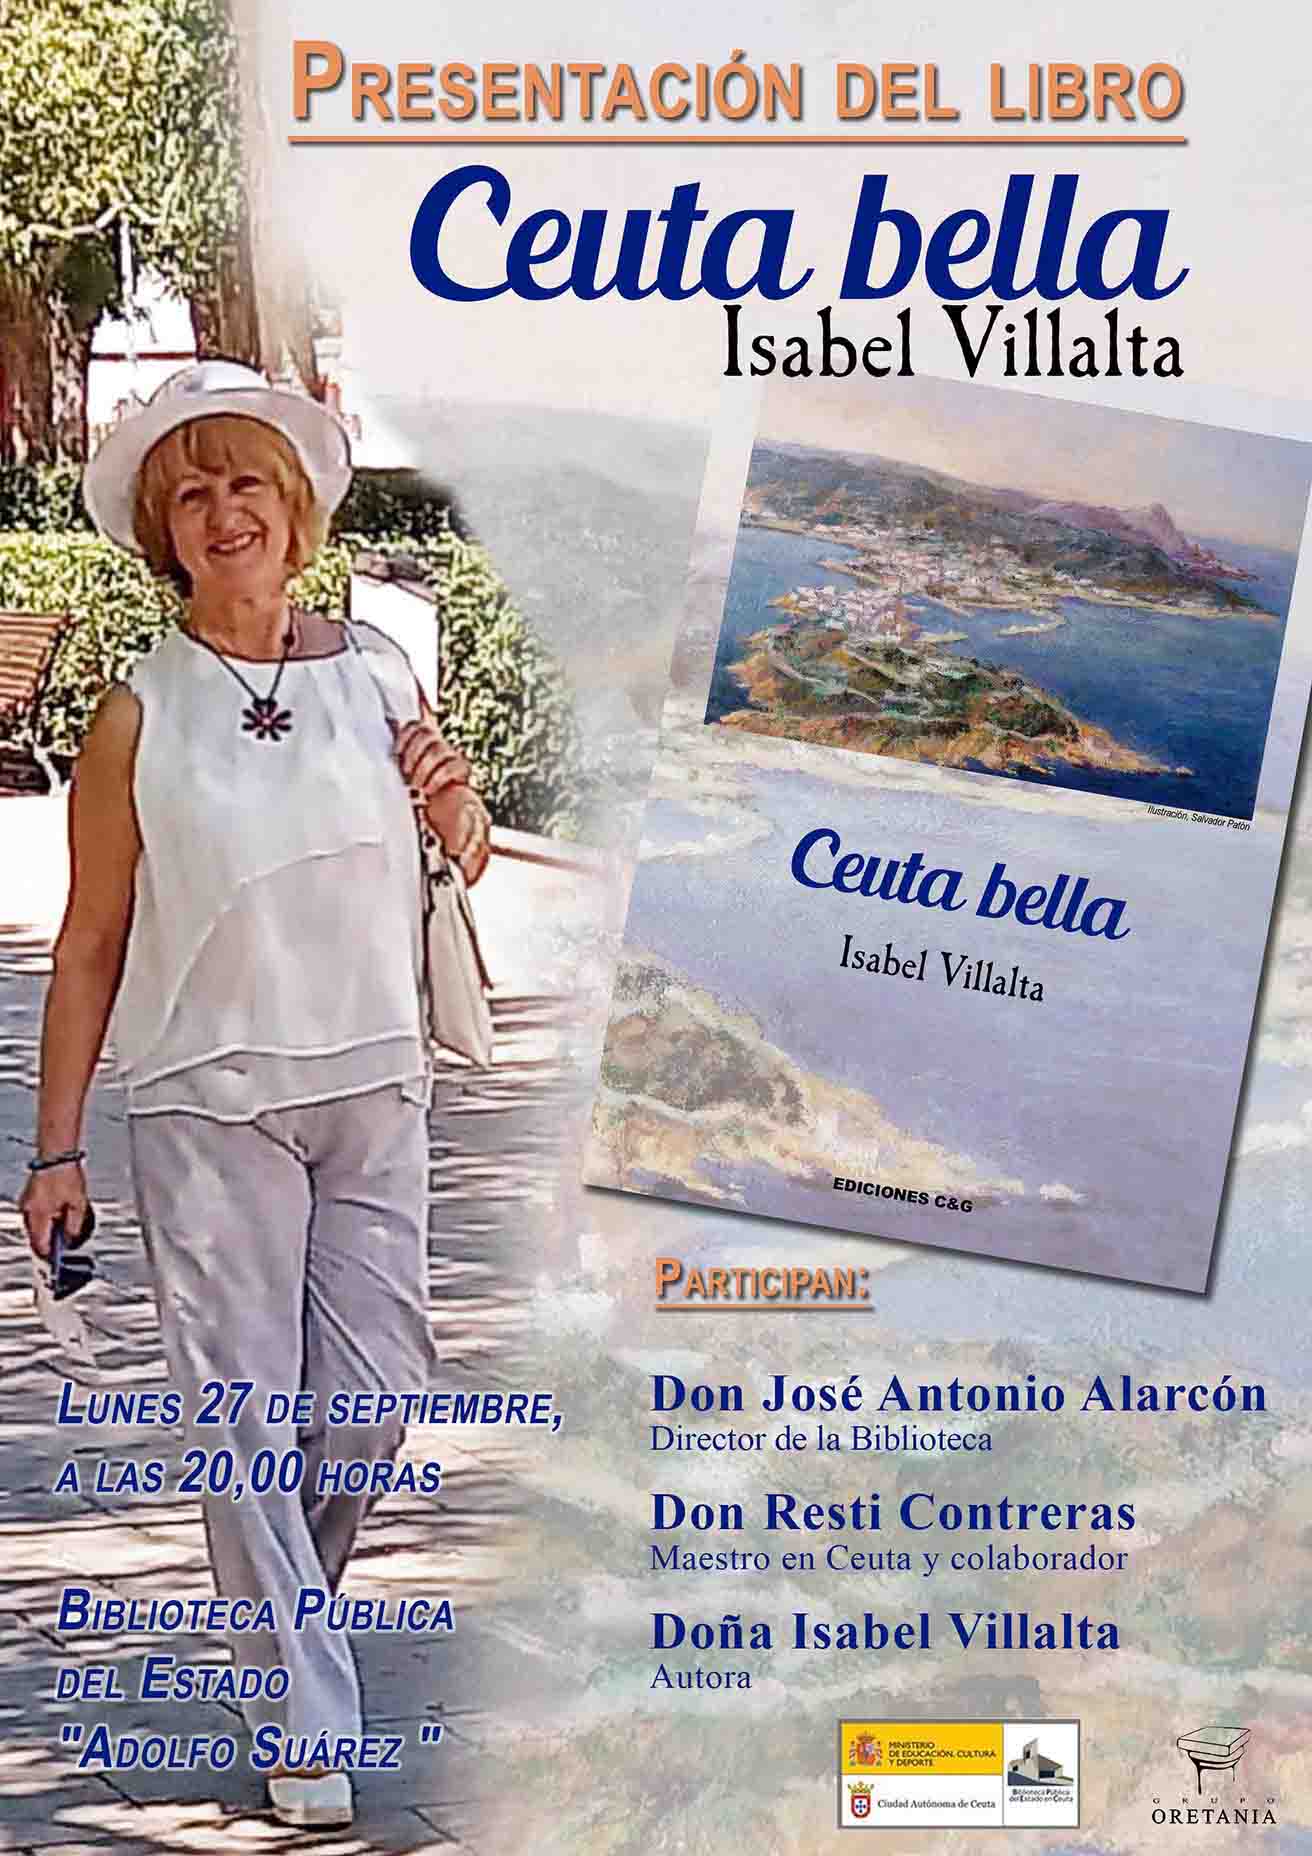 cueta-bella-isabel-miralba3